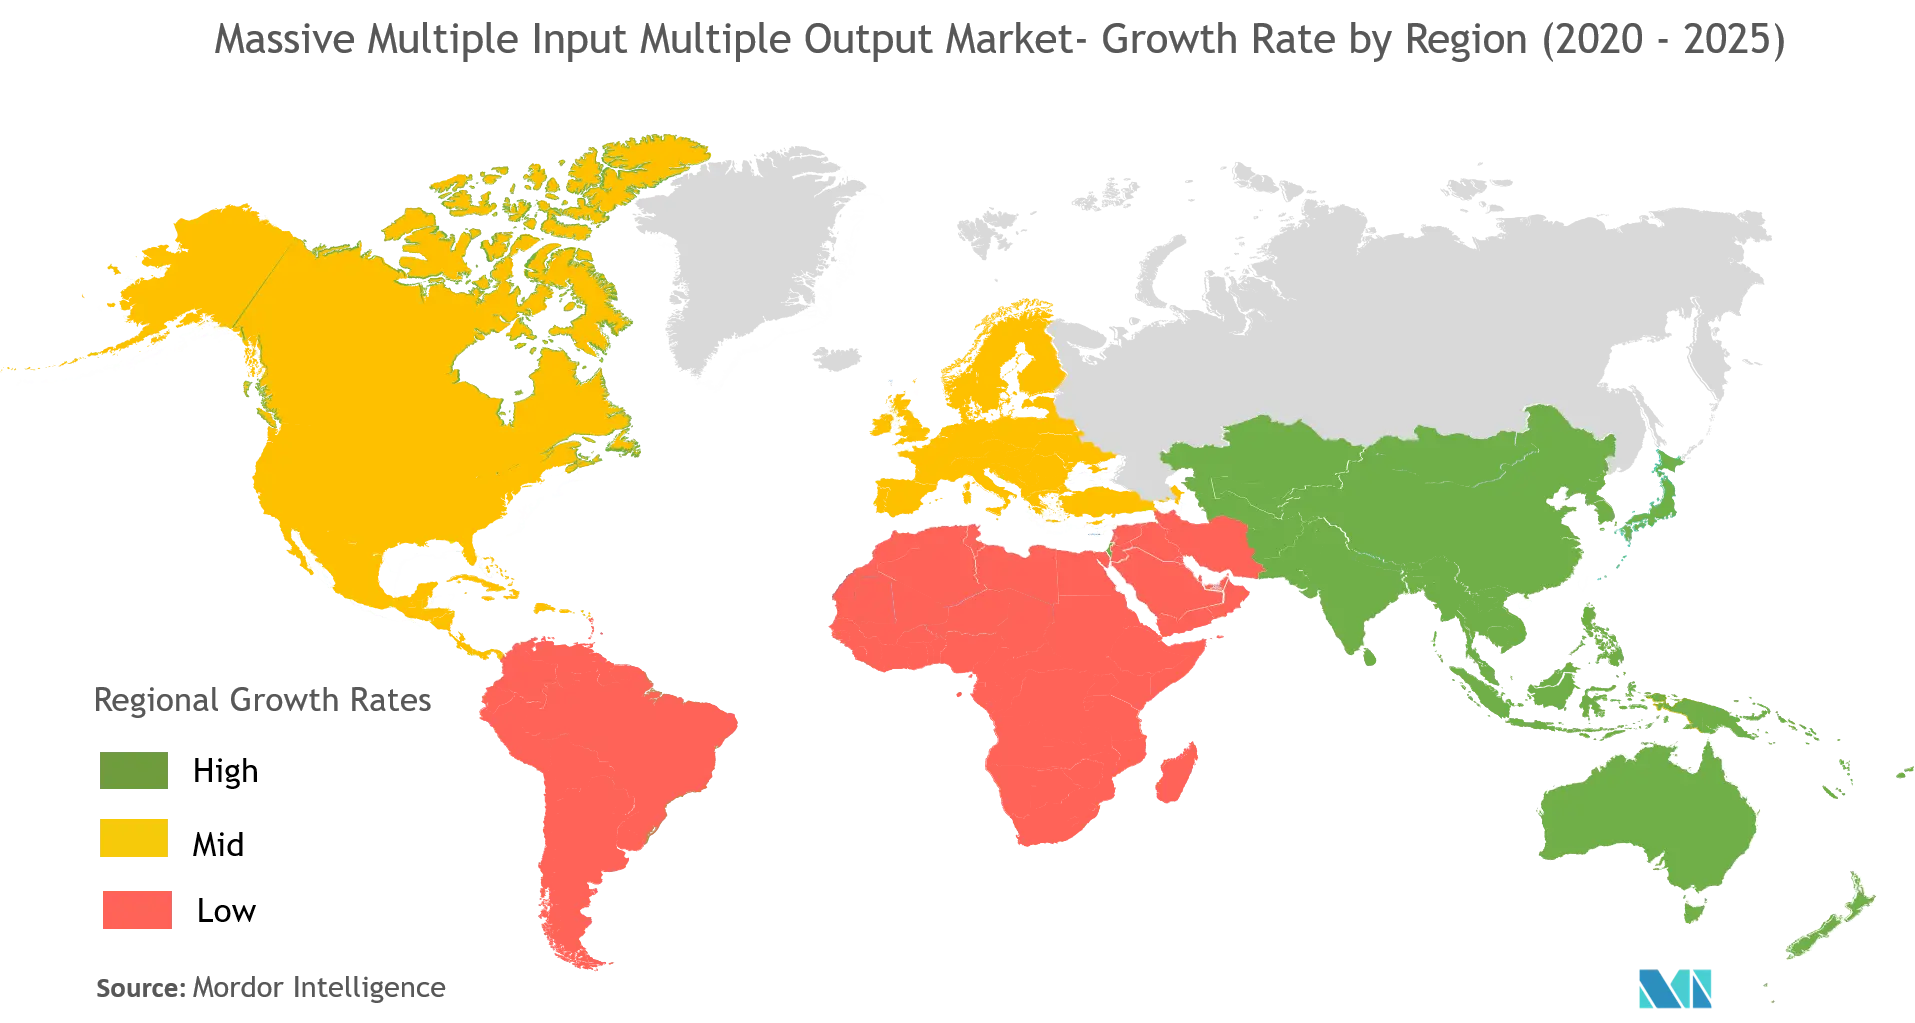 massive multiple-input multiple-output (MIMO) market growth